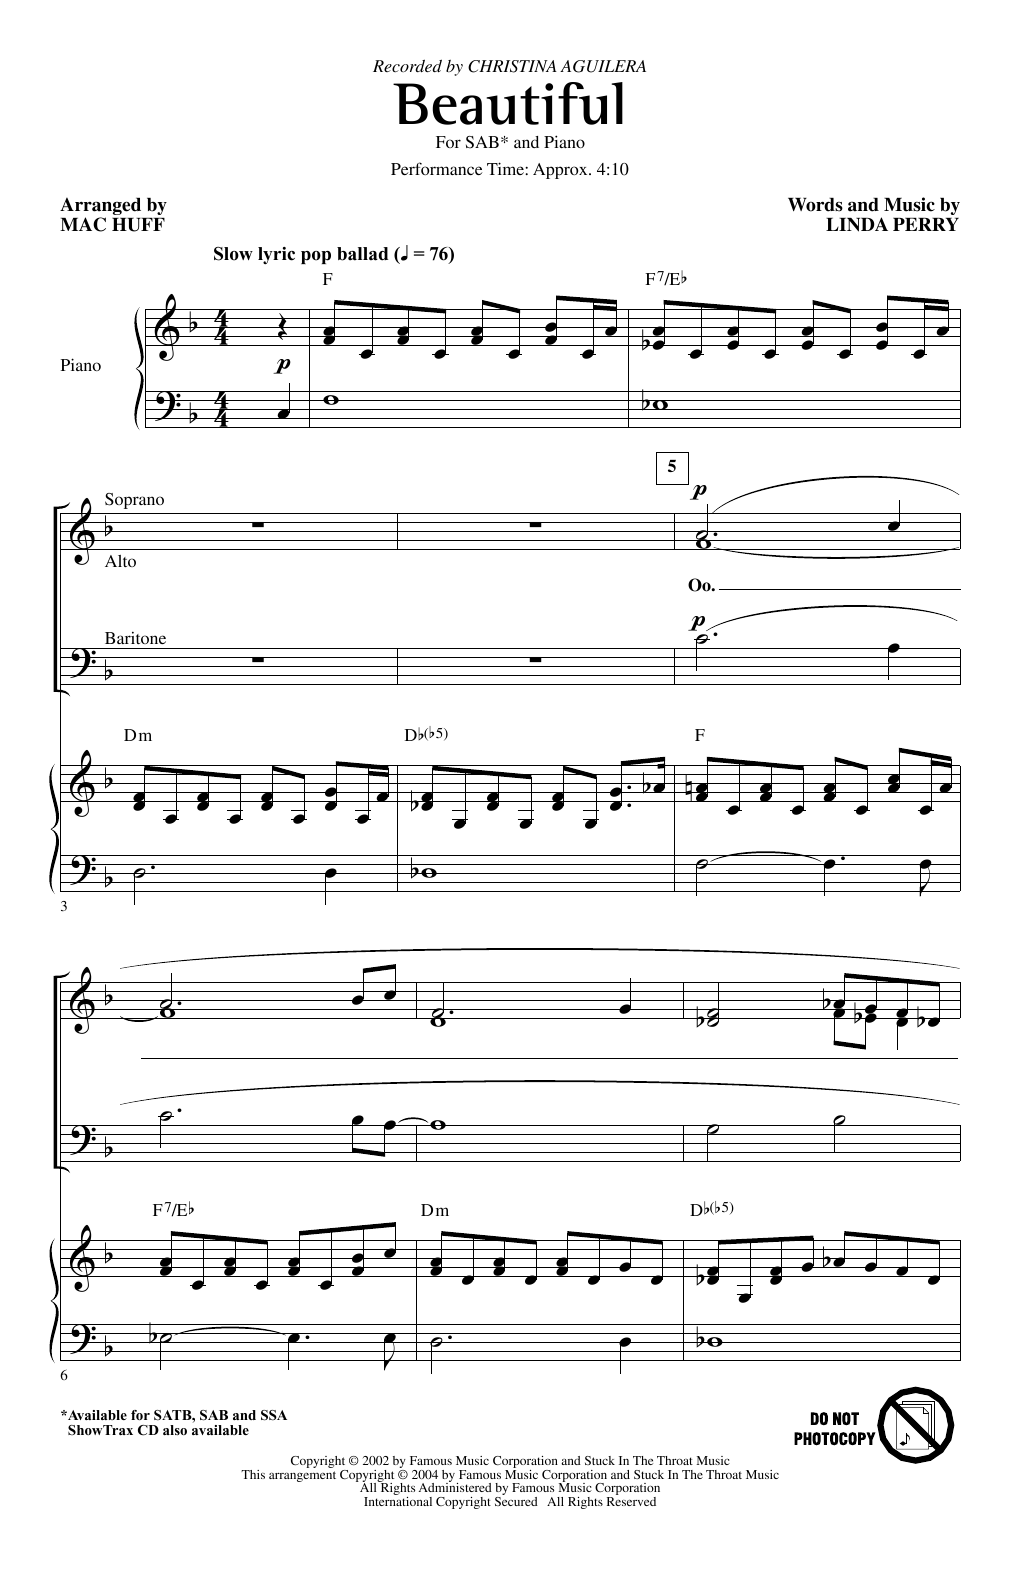 Christina Aguilera Beautiful (arr. Mac Huff) Sheet Music Notes & Chords for SSA Choir - Download or Print PDF